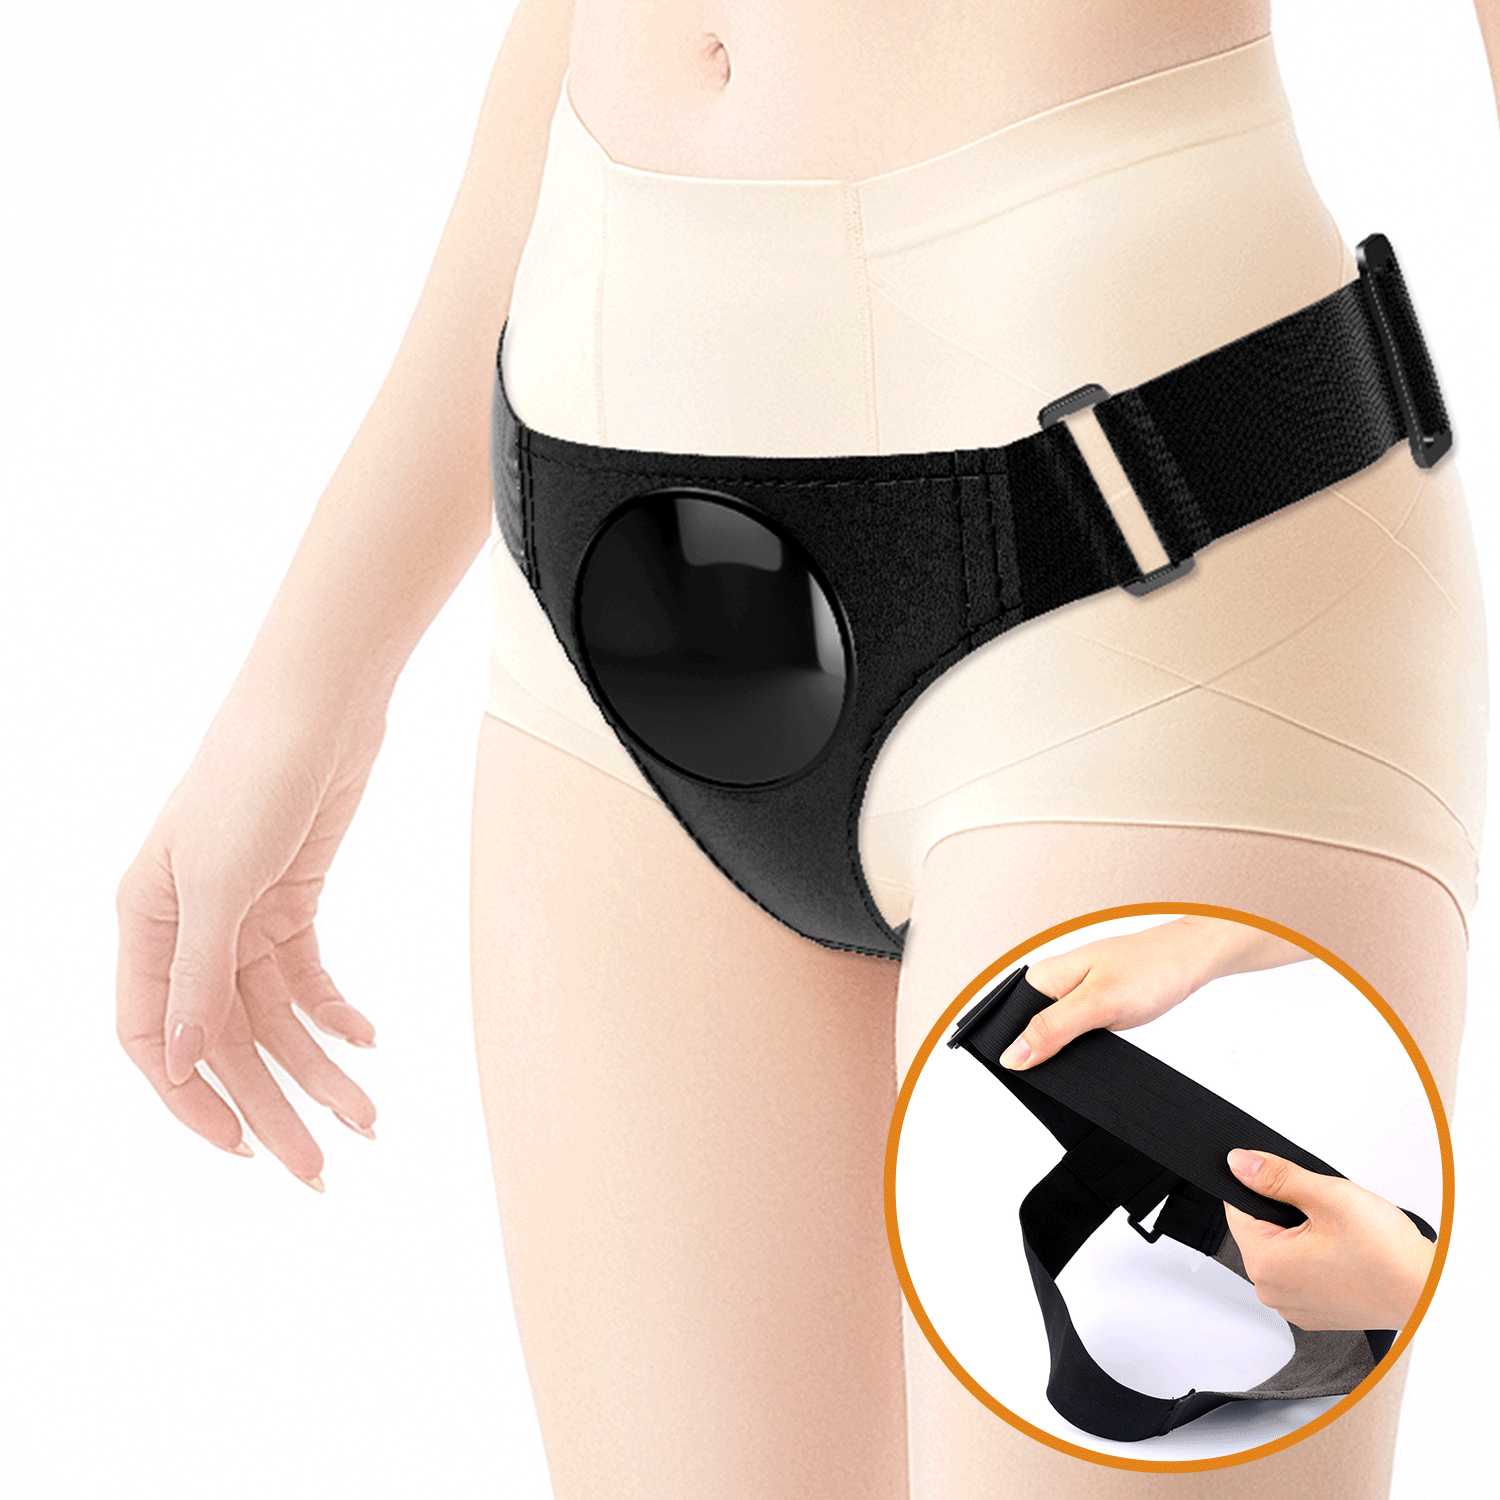 7.2" Dildo Adjustable Strap On Harness for Women